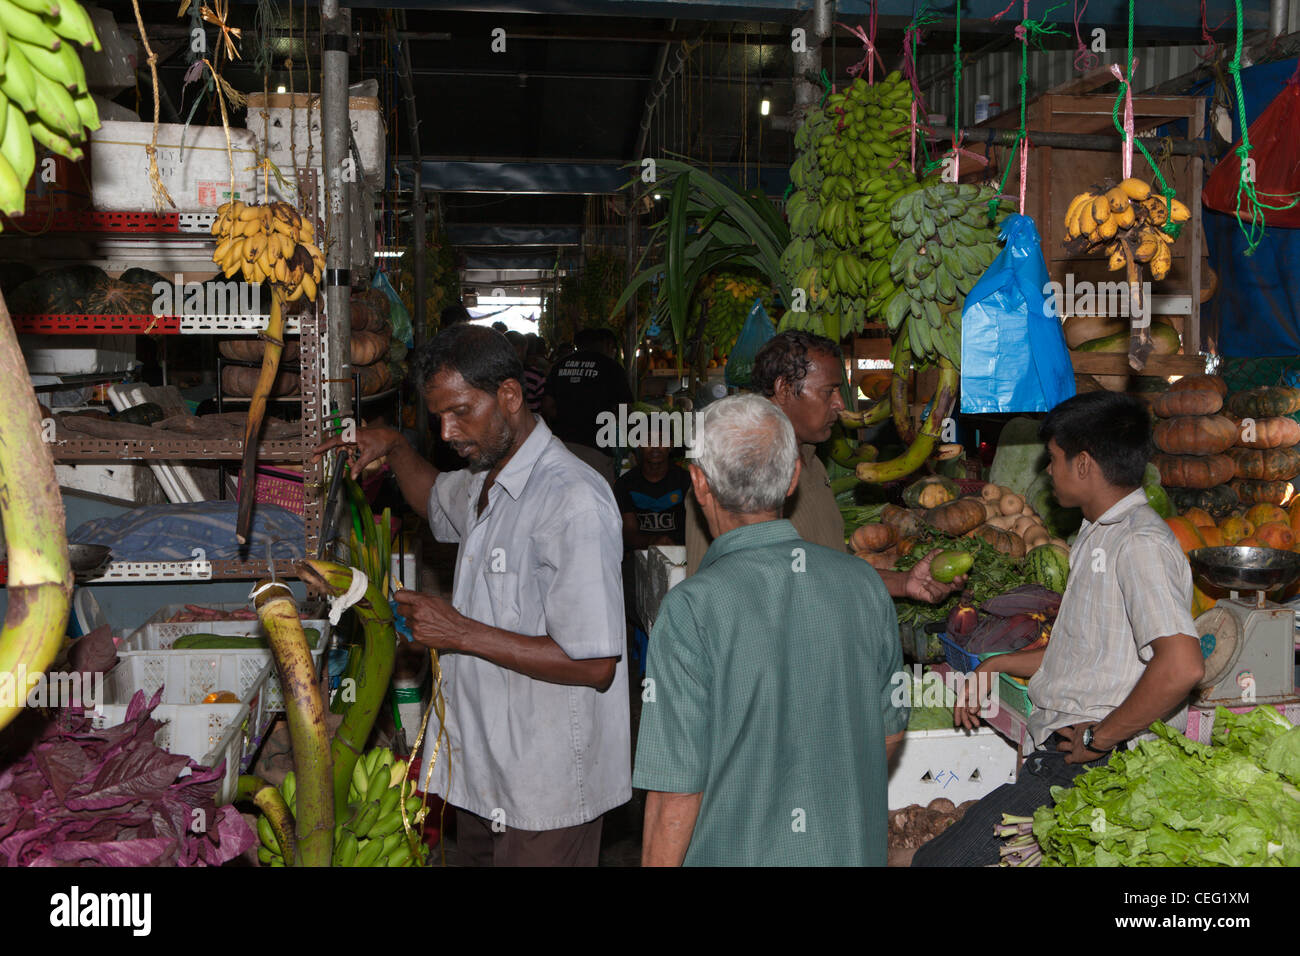 Fruit Market of Male, Indian Ocean, Maldives Stock Photo